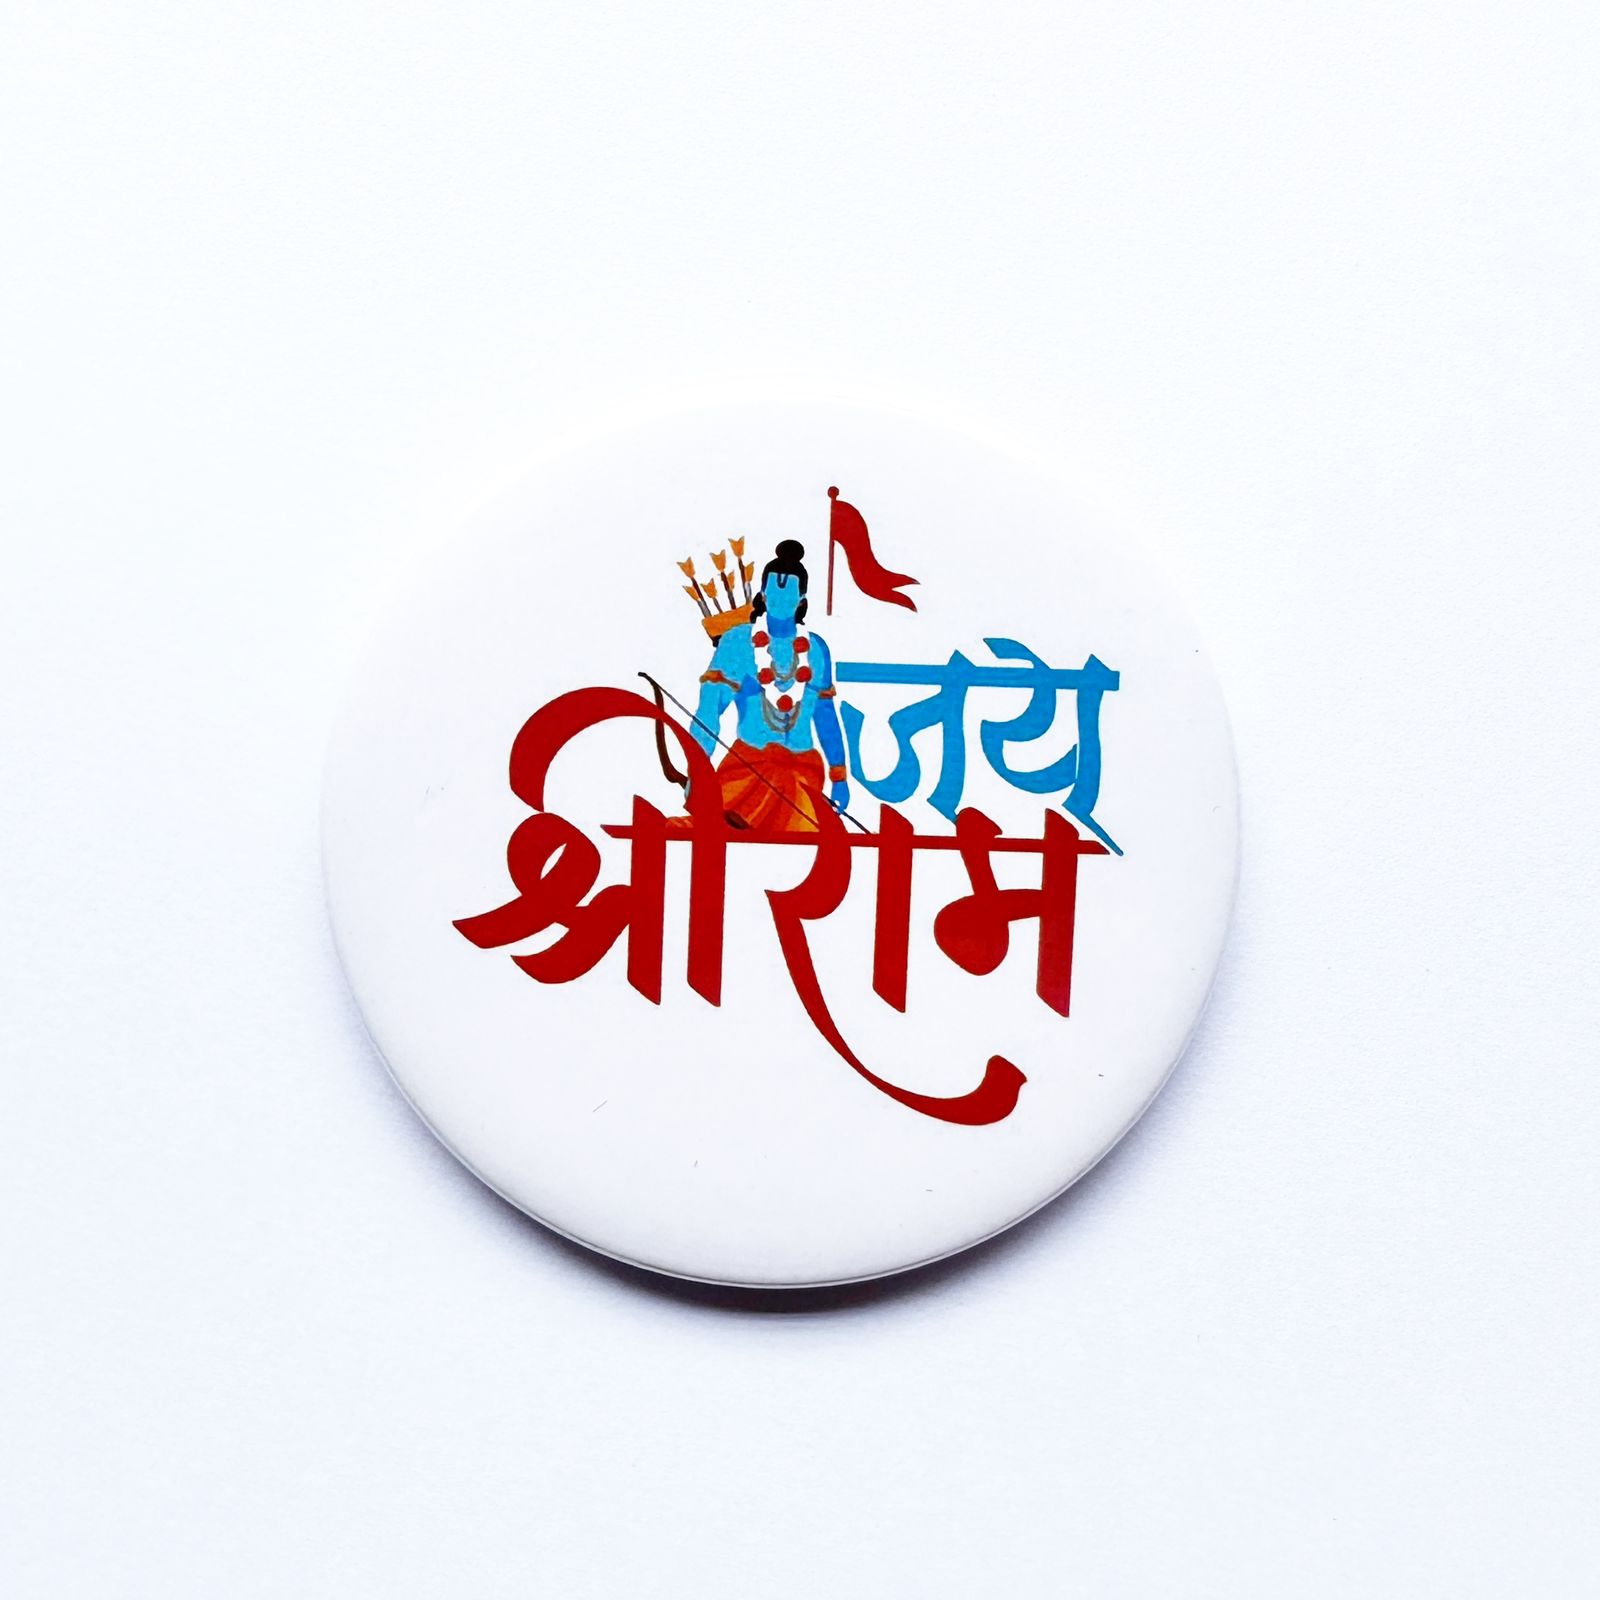 Jai Shri Ram Stylish Creative Vinyl Radium Sticker - Between 35cm - 50cm,  Red at Rs 499/piece | Mariahu| ID: 2851809835062